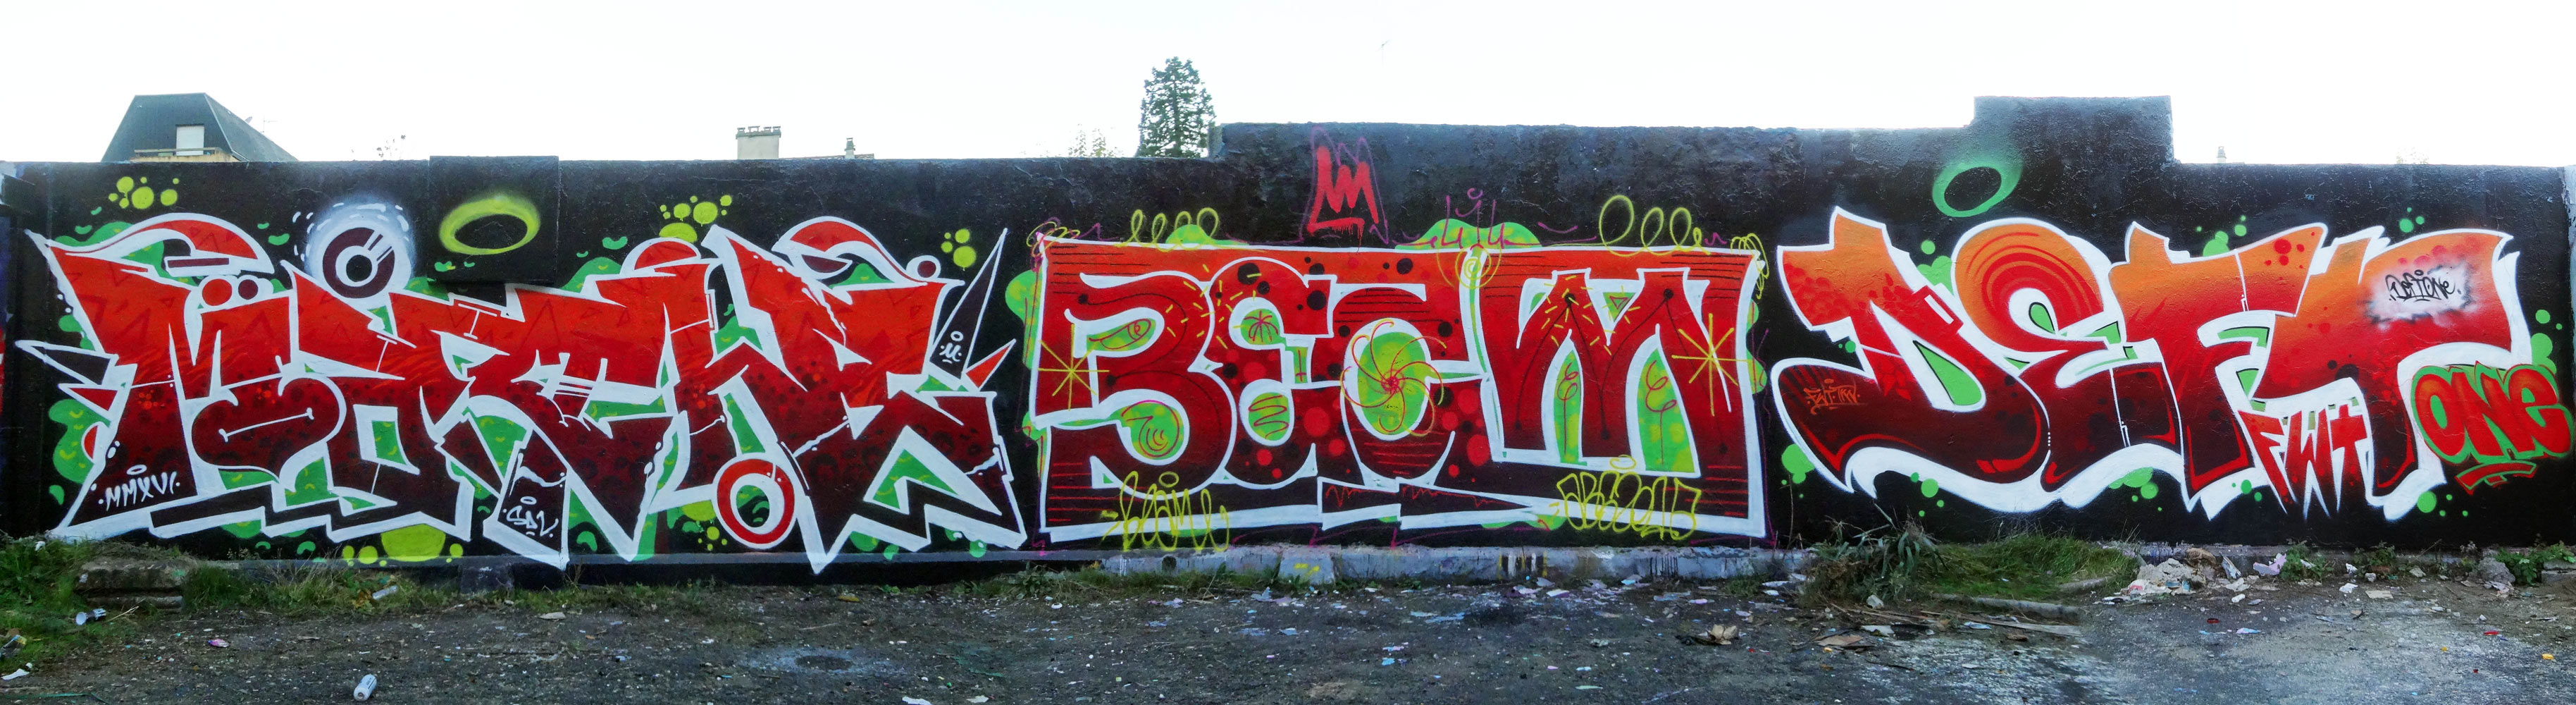 marthe-beam414-deft-fresque-graffiti-ensacf-2016